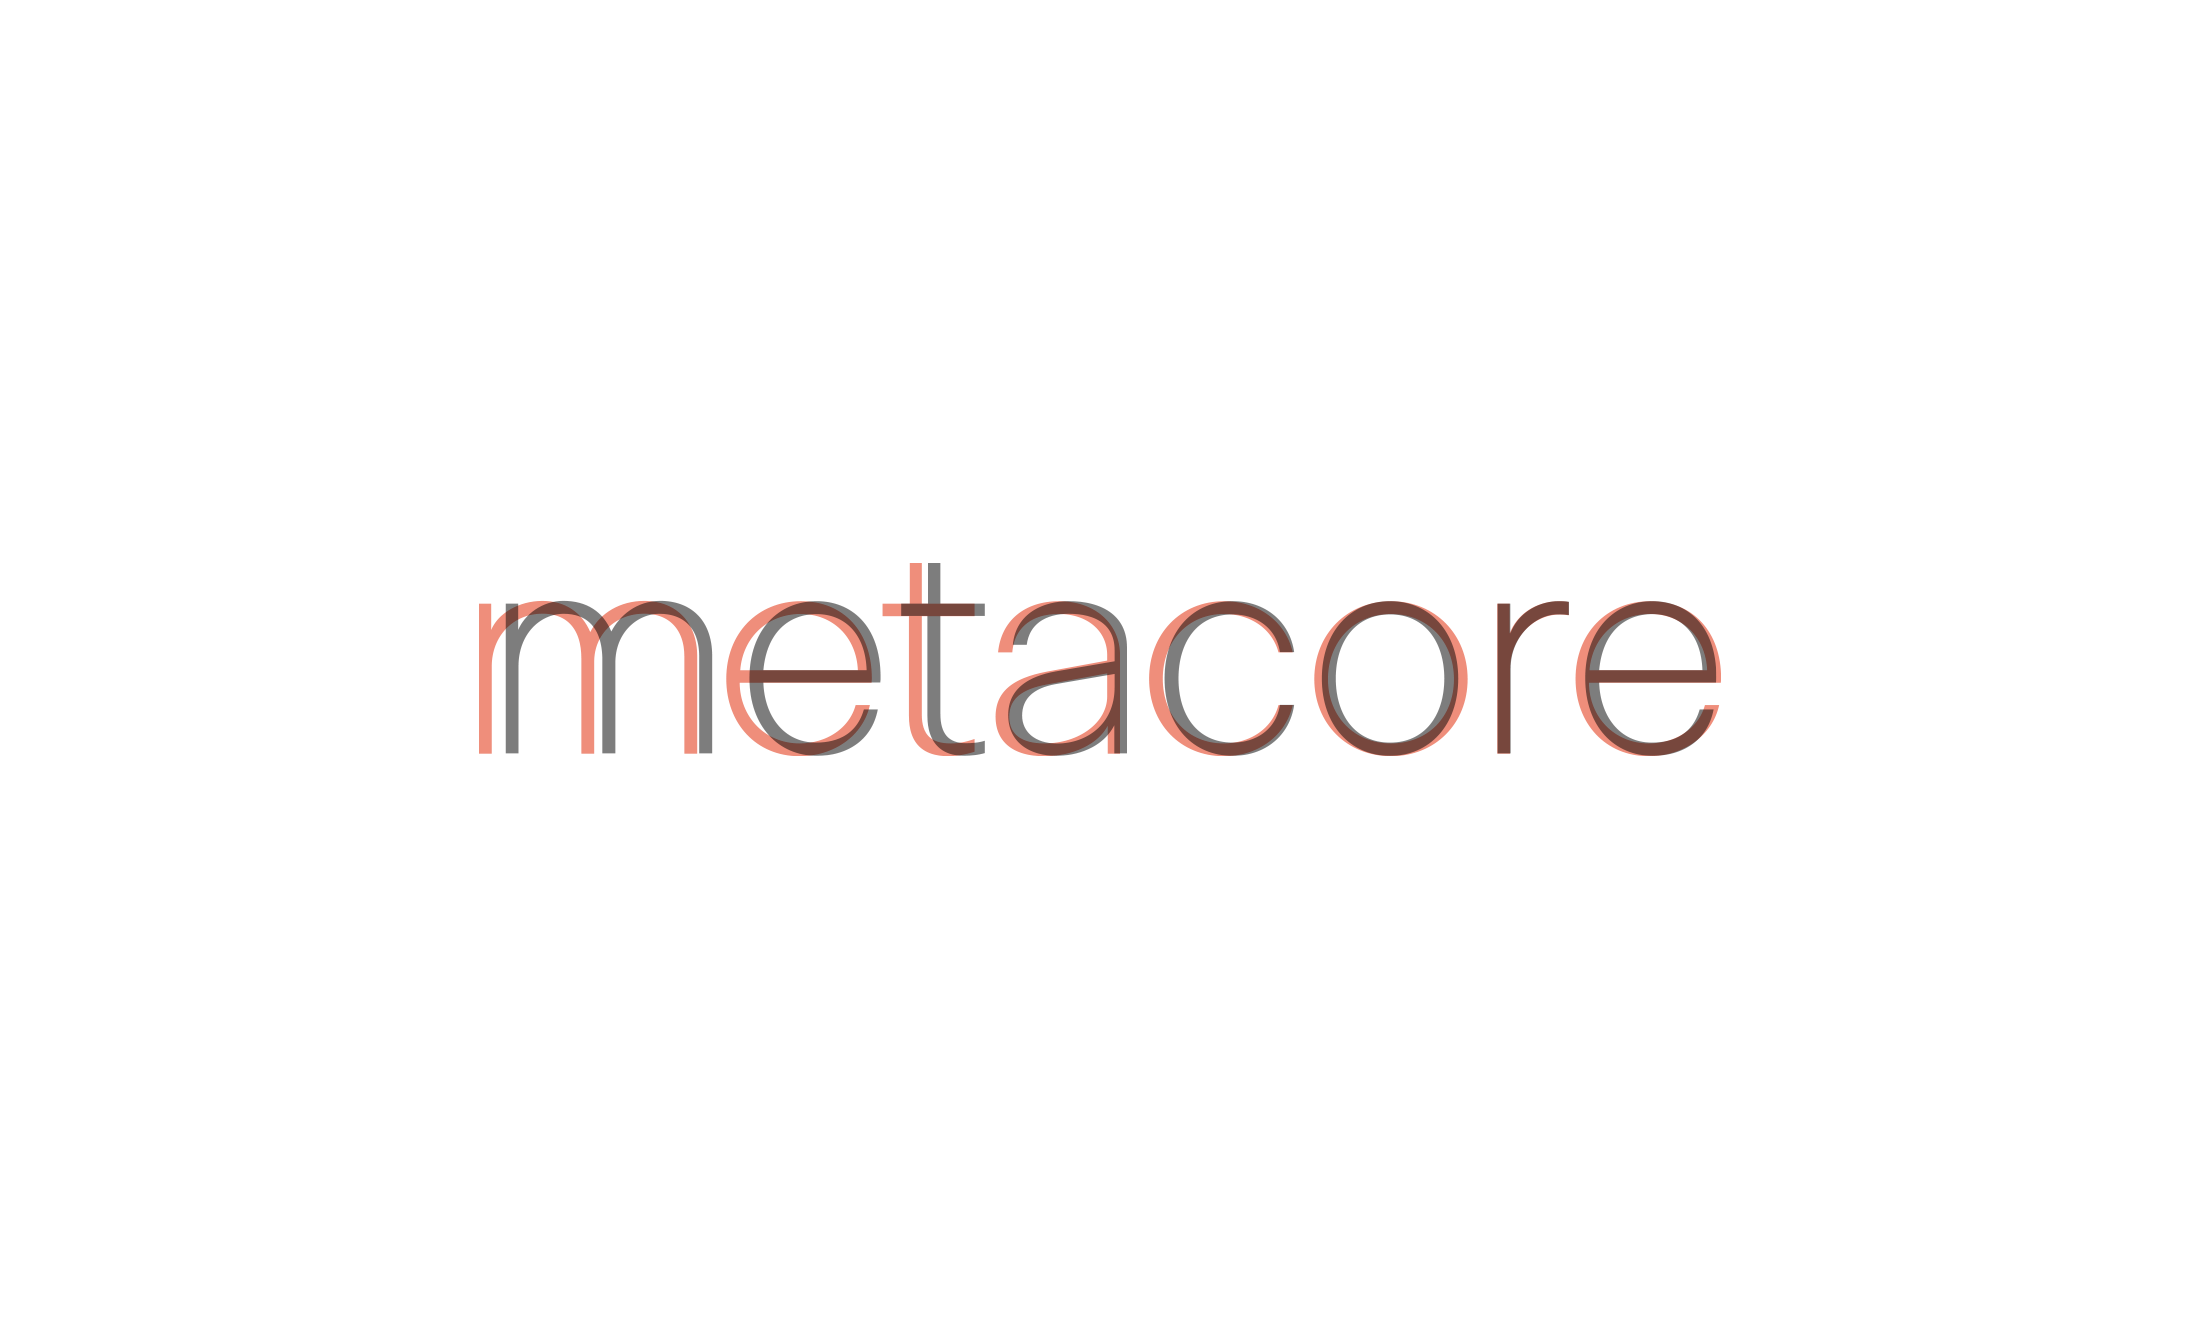 Metacore logotype refinement by Dalton Maag